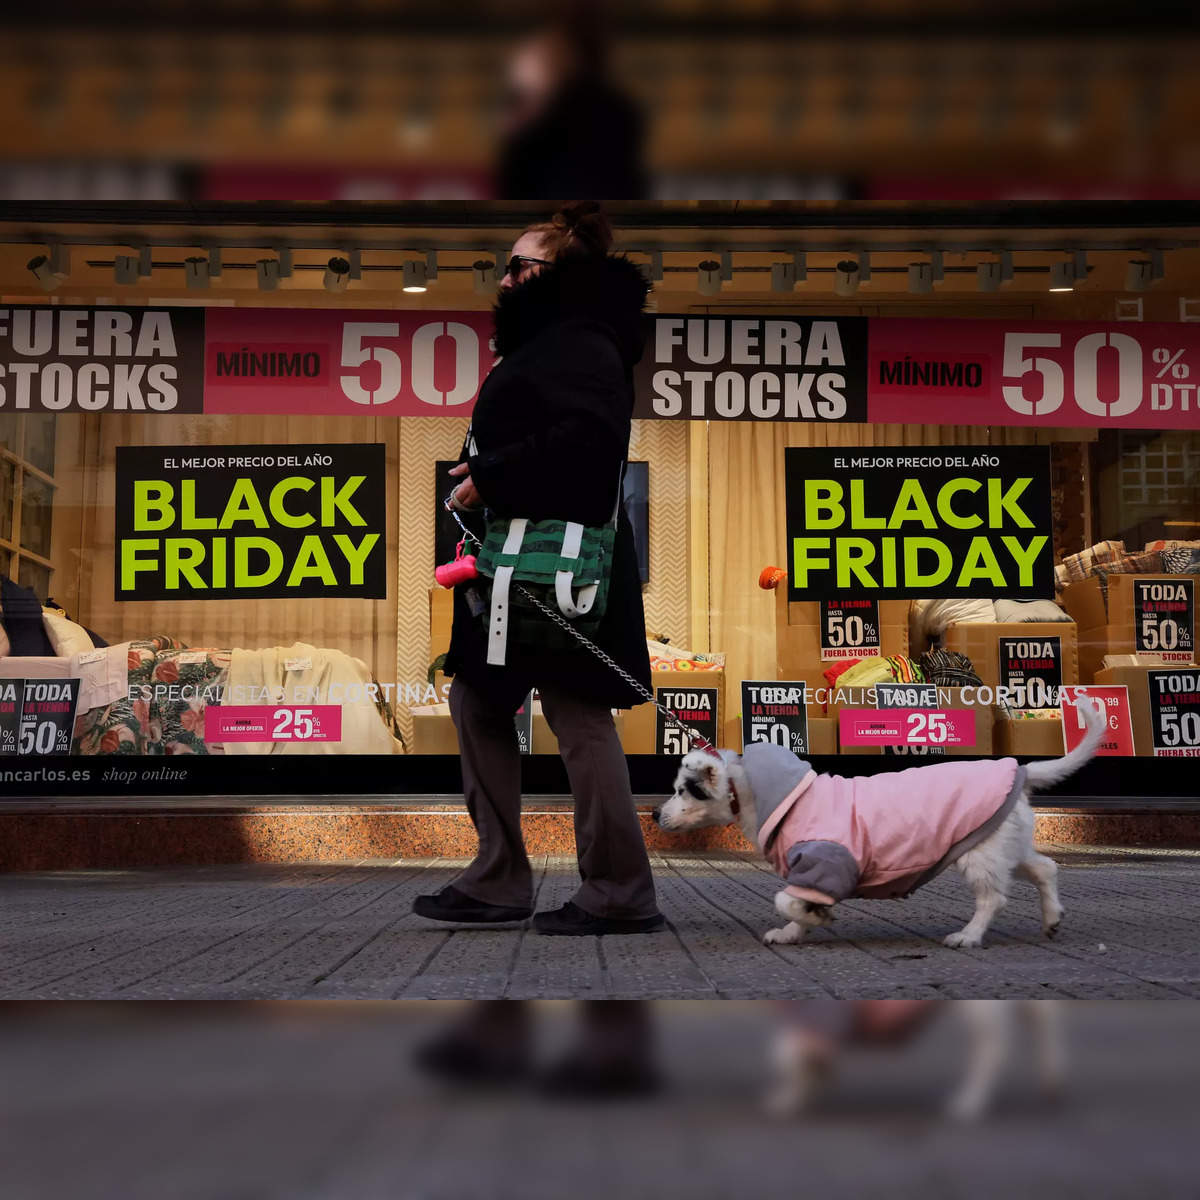 Black Friday Clothes Sale Digital Signage Template